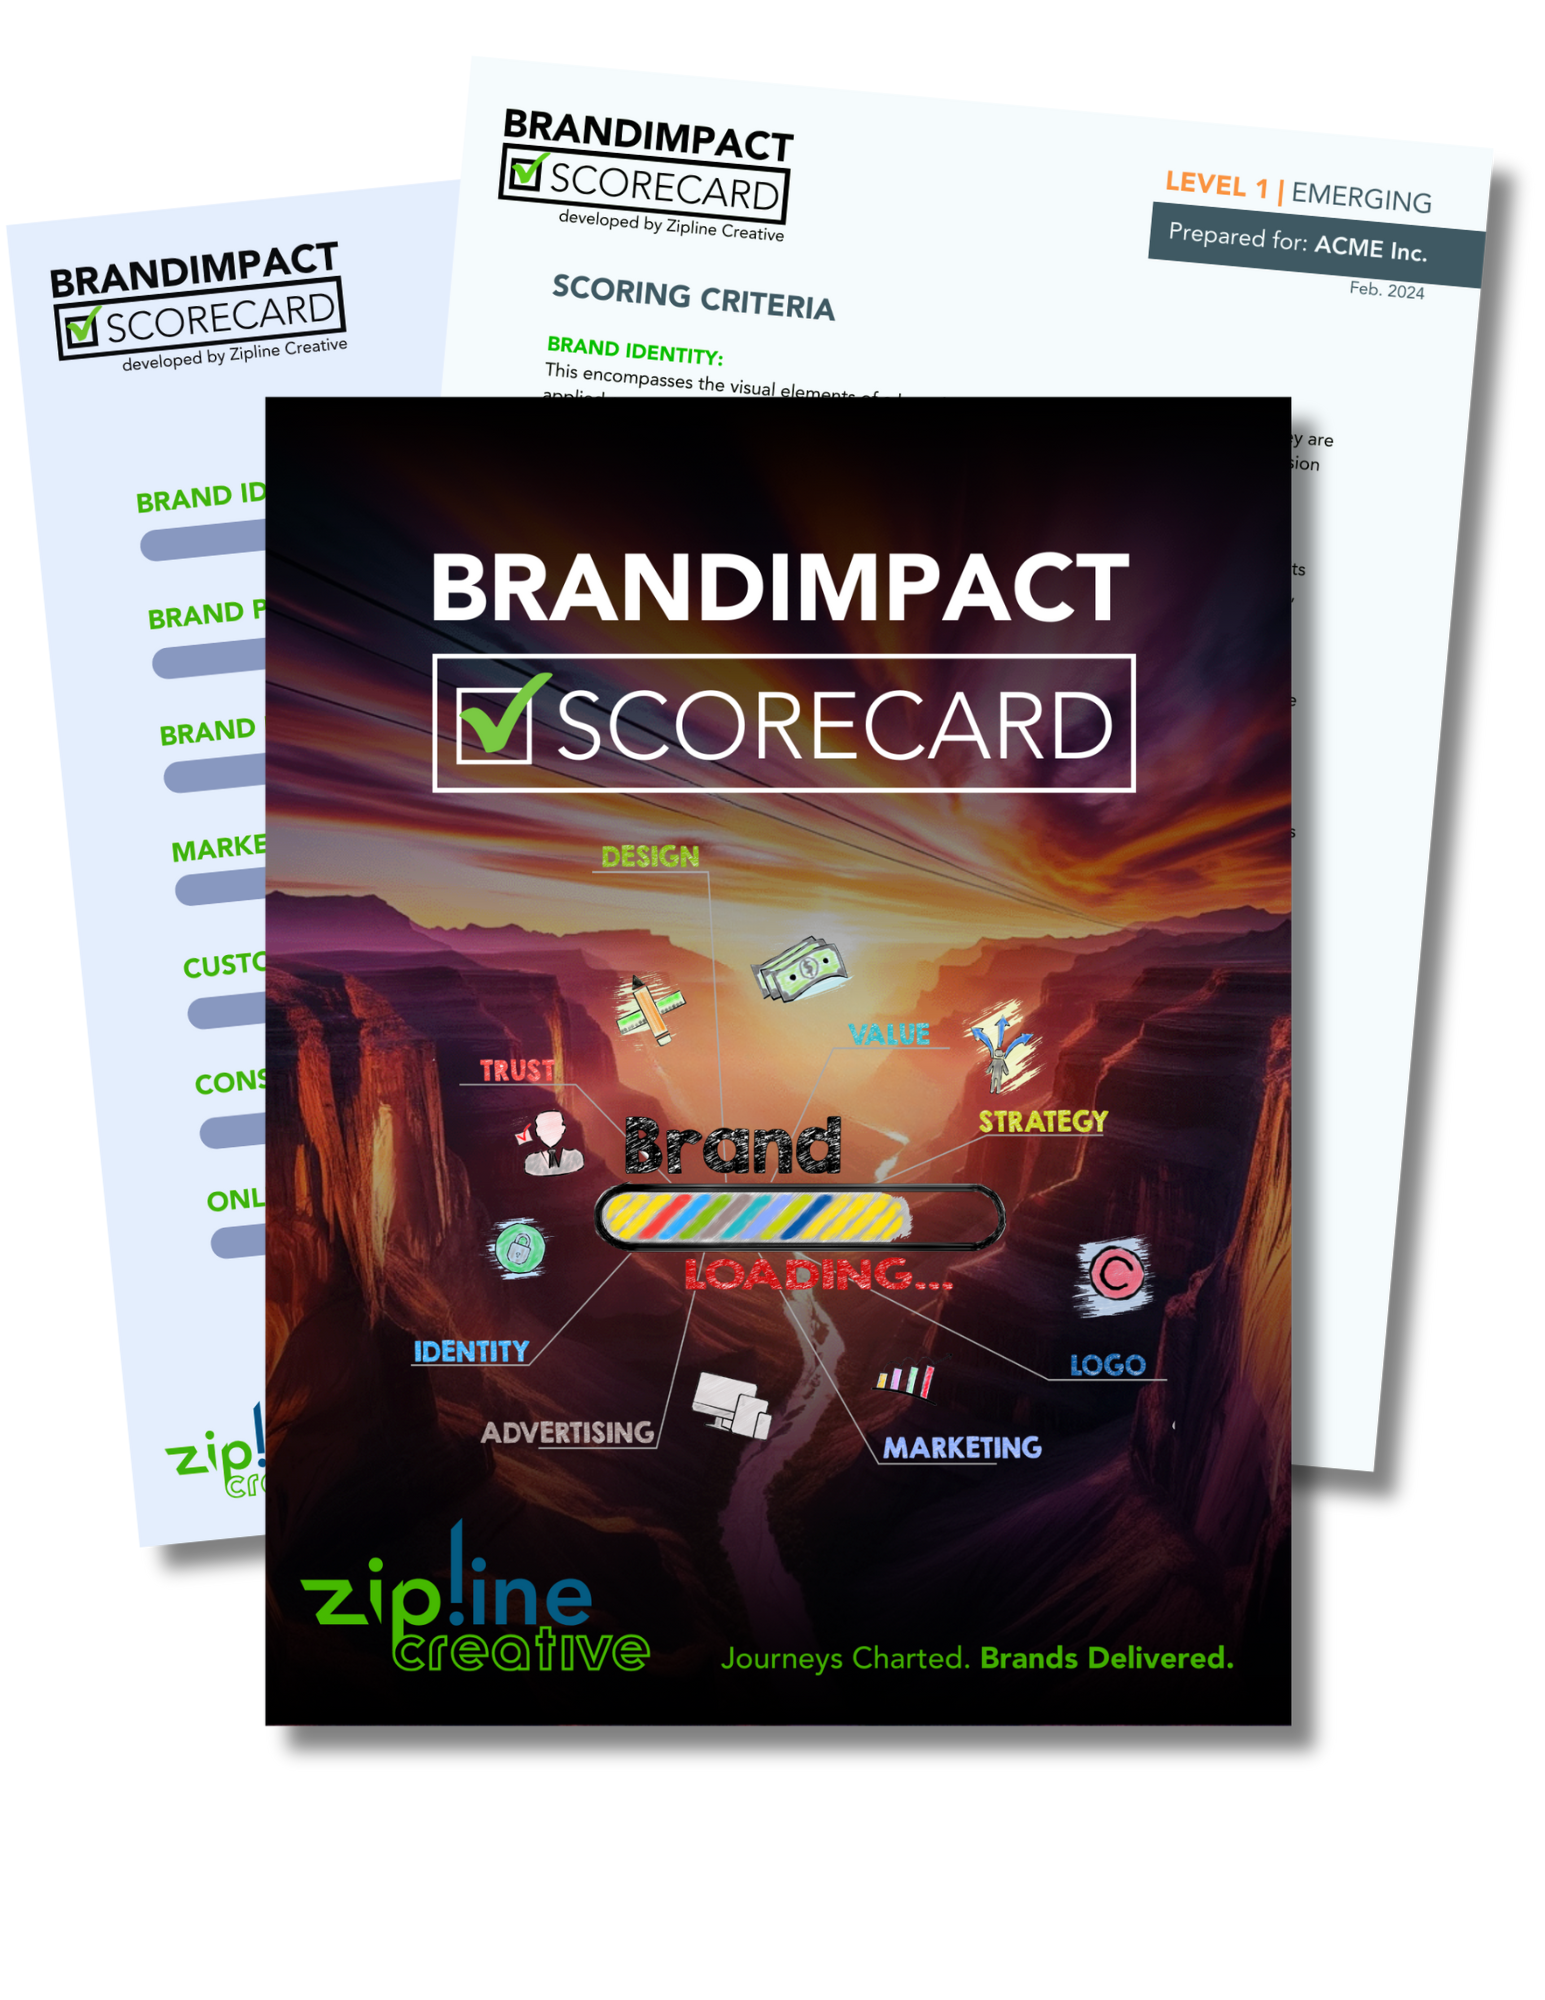 BrandImpact Scorecard